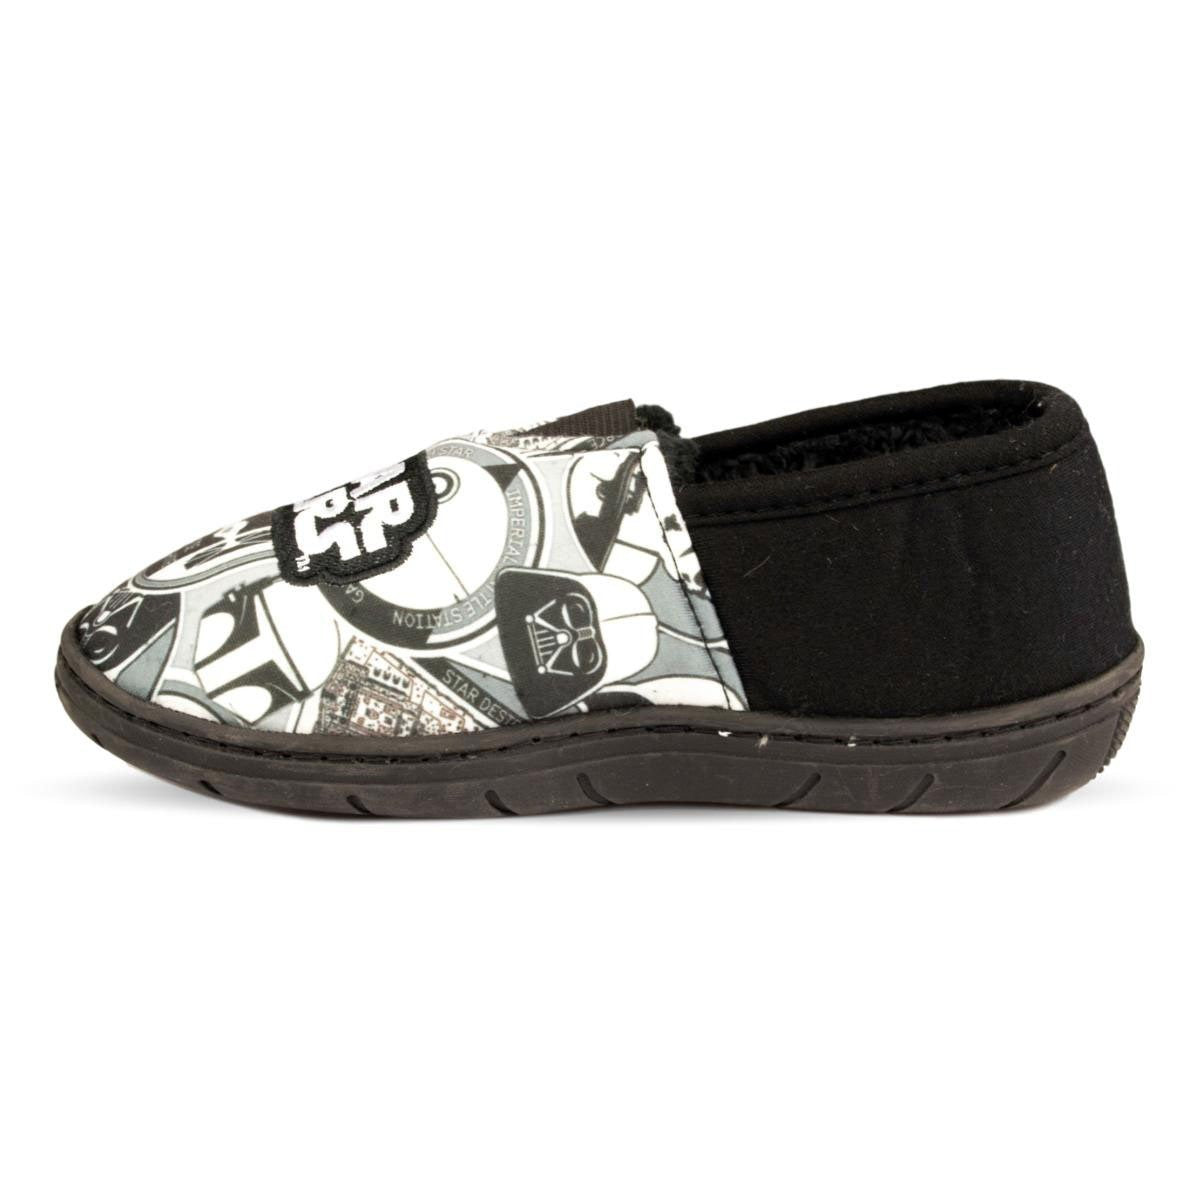 Star Wars Boys Black & White Slipper Slip On - Watney Shoes 